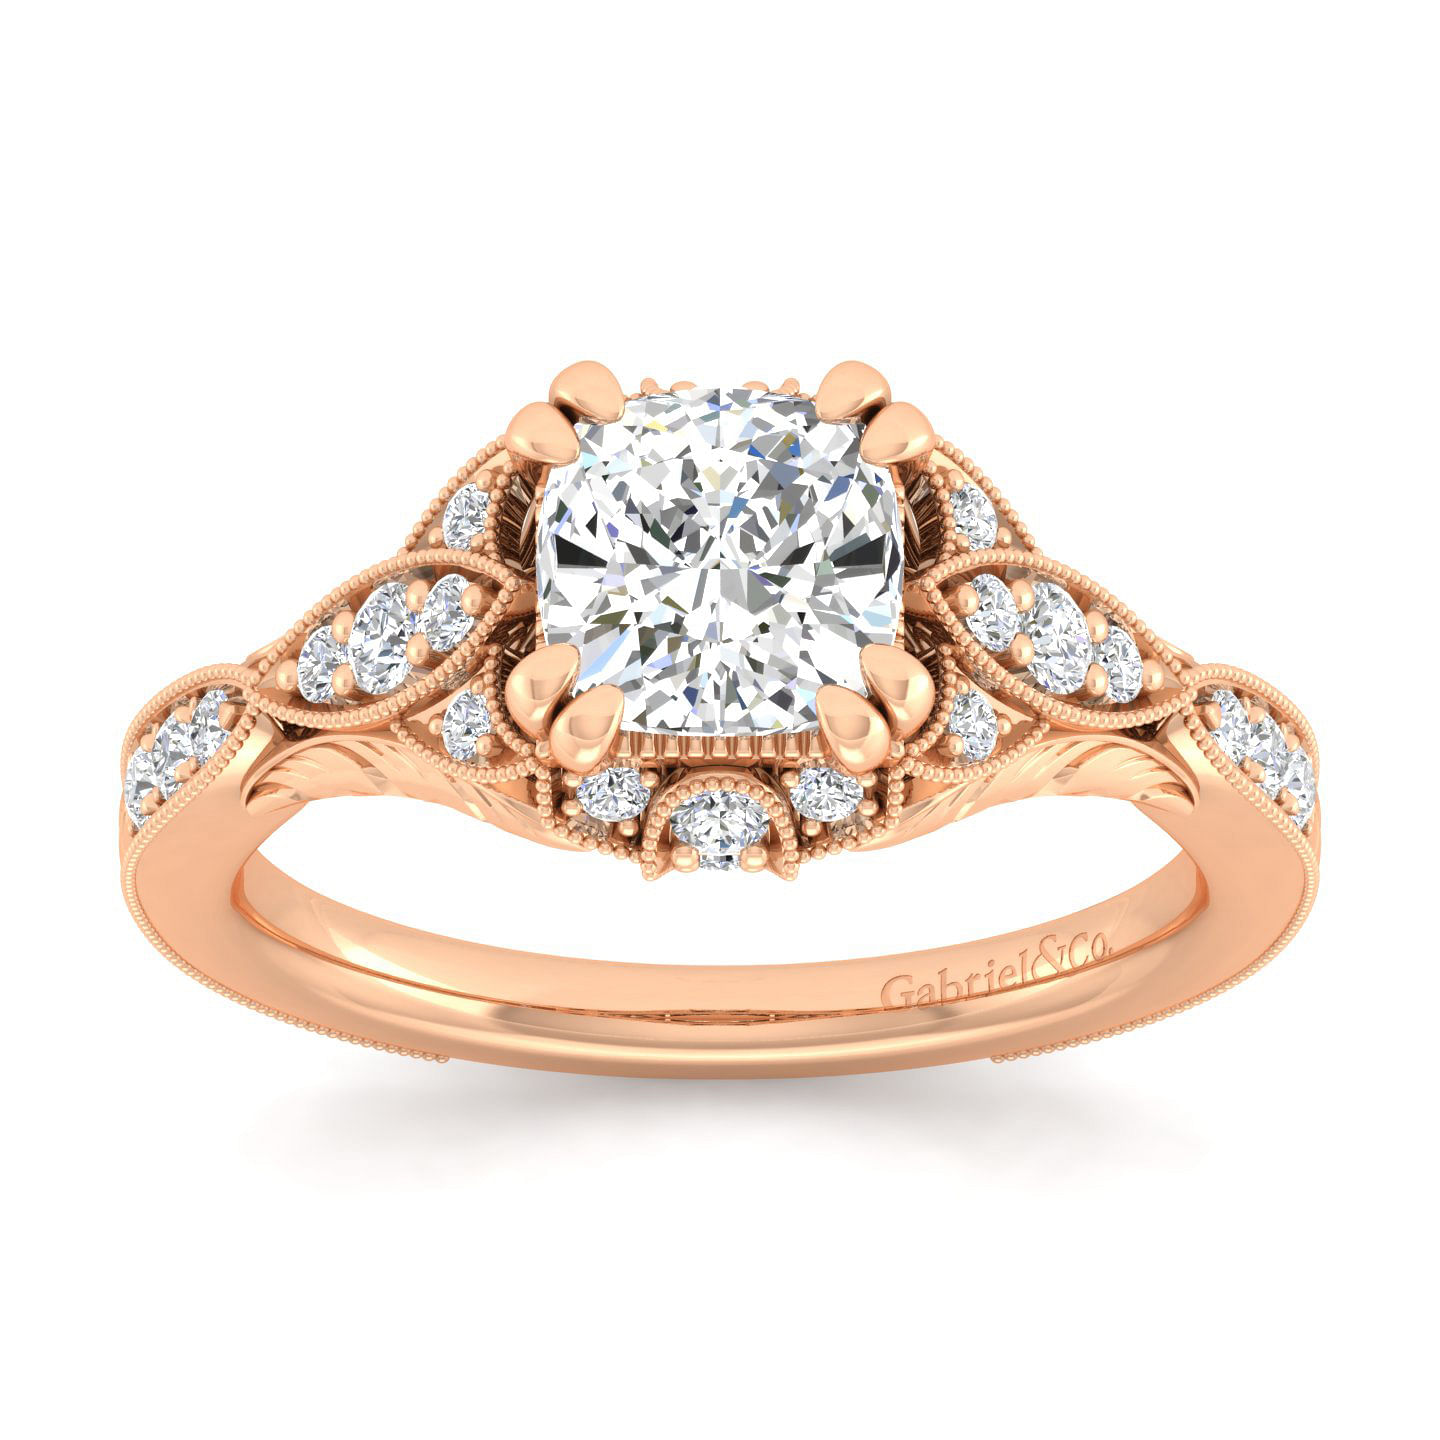 Unique 14K Rose Gold Vintage Inspired Cushion Cut Diamond Halo Engagement Ring